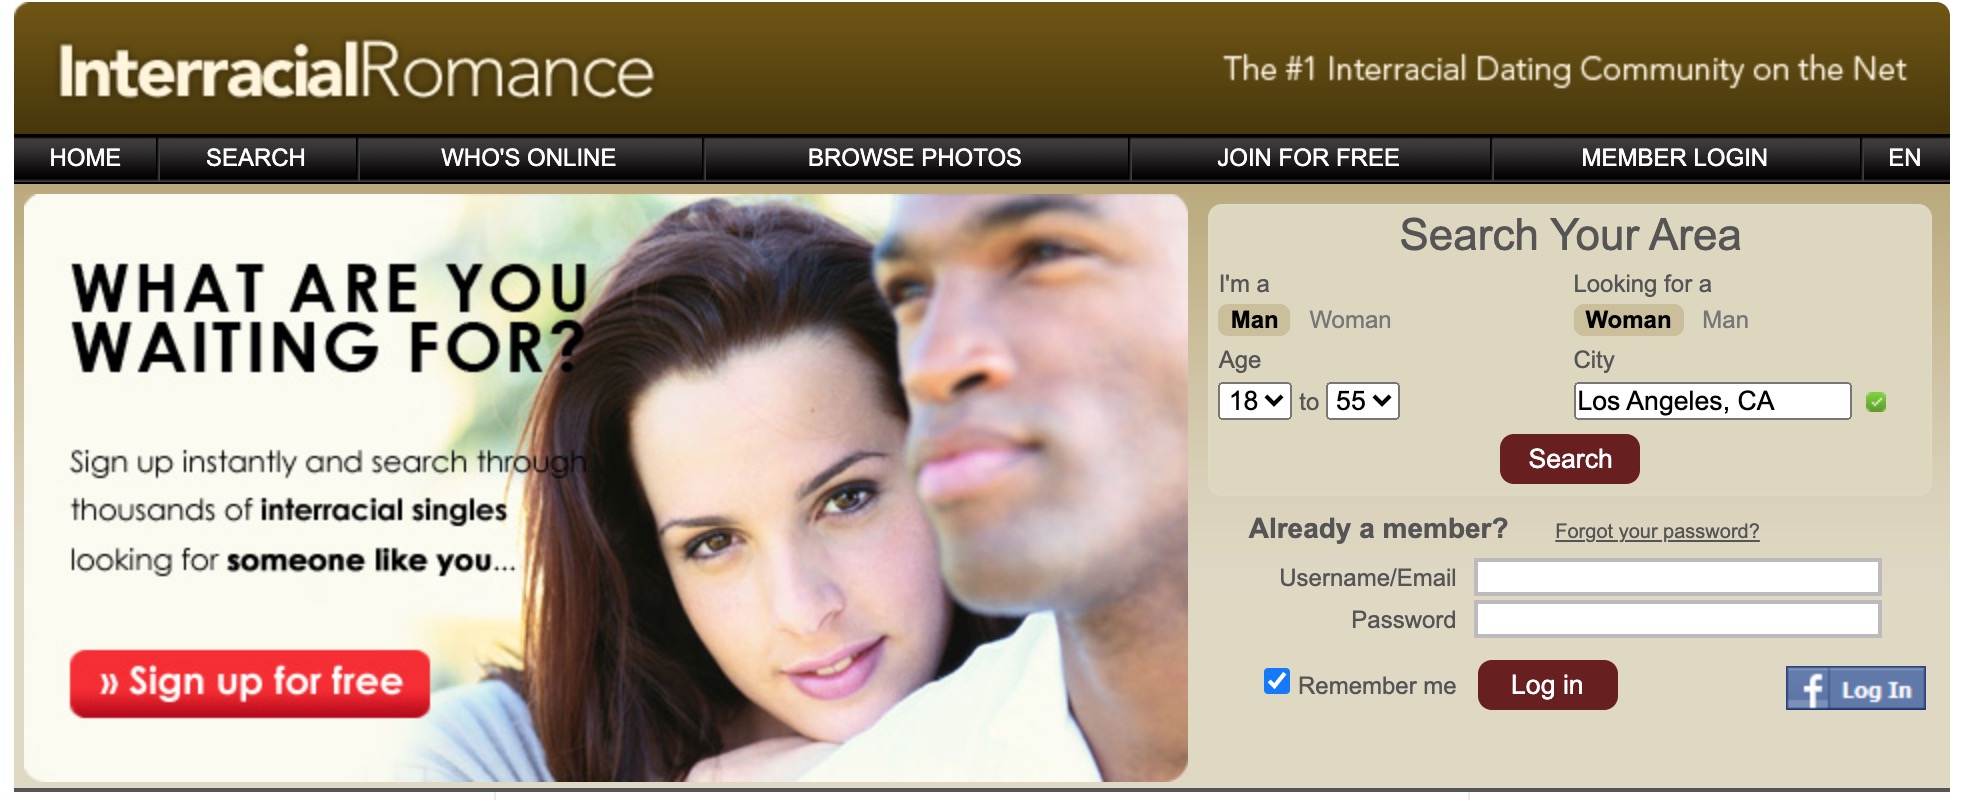 Interracial Romance main page